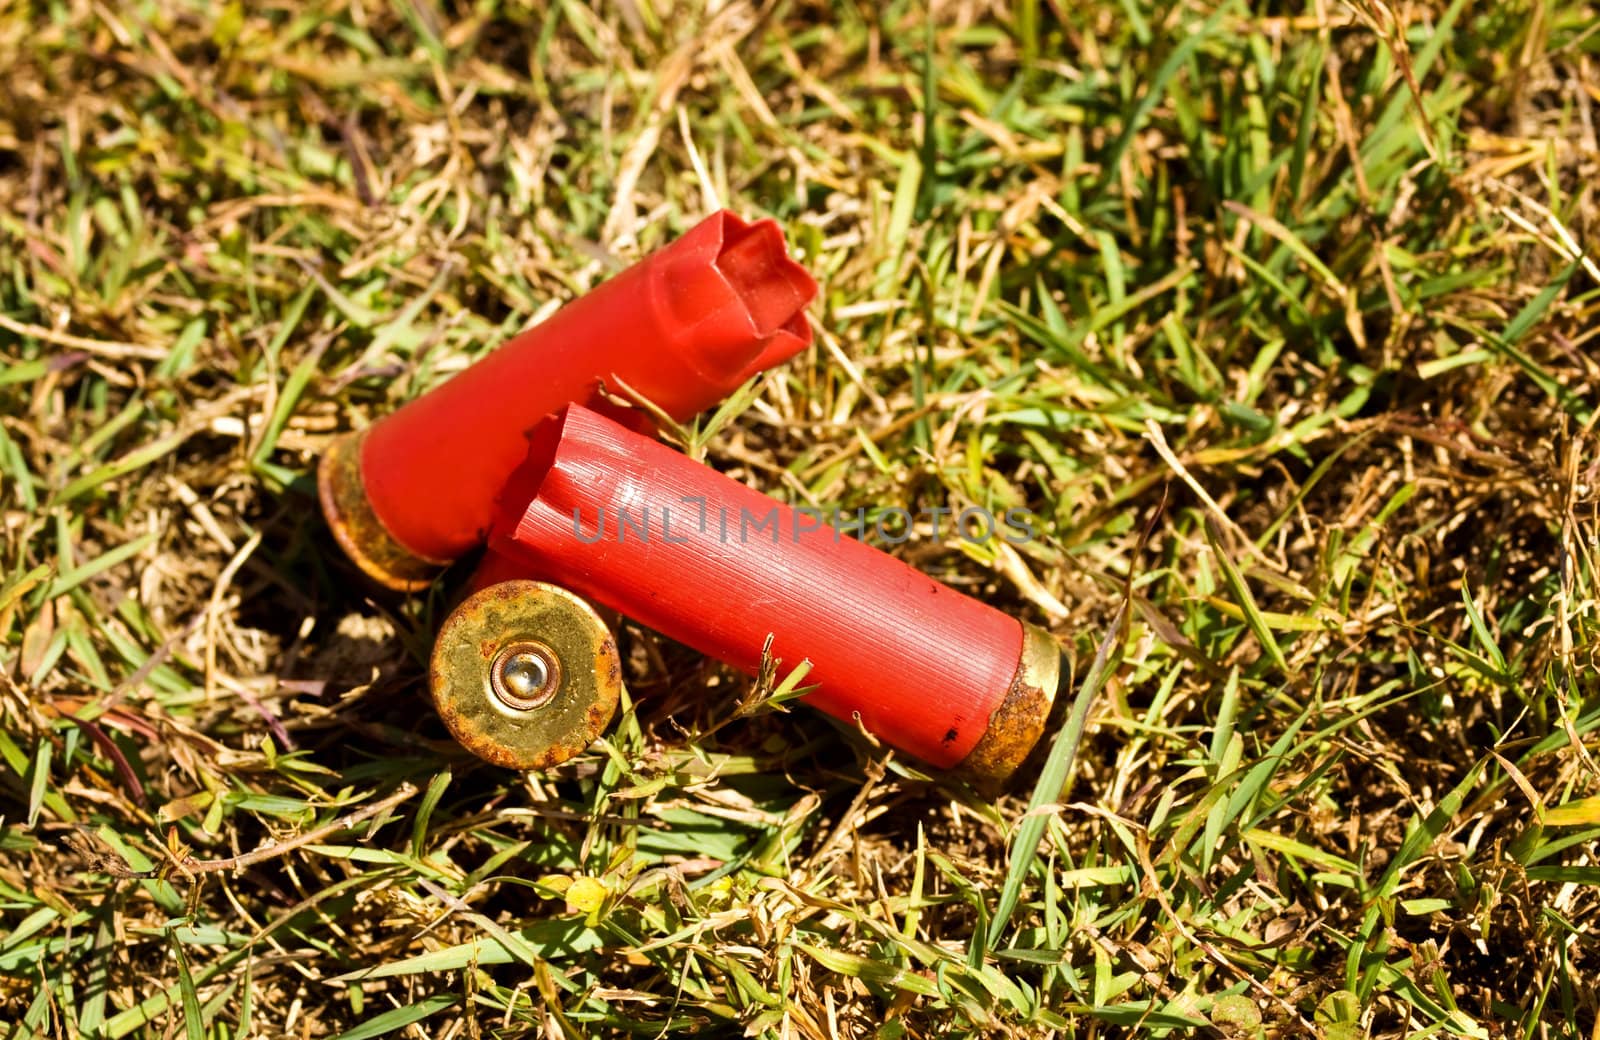 Used fired shells empty red shot gun  bullet cartridges by sherj